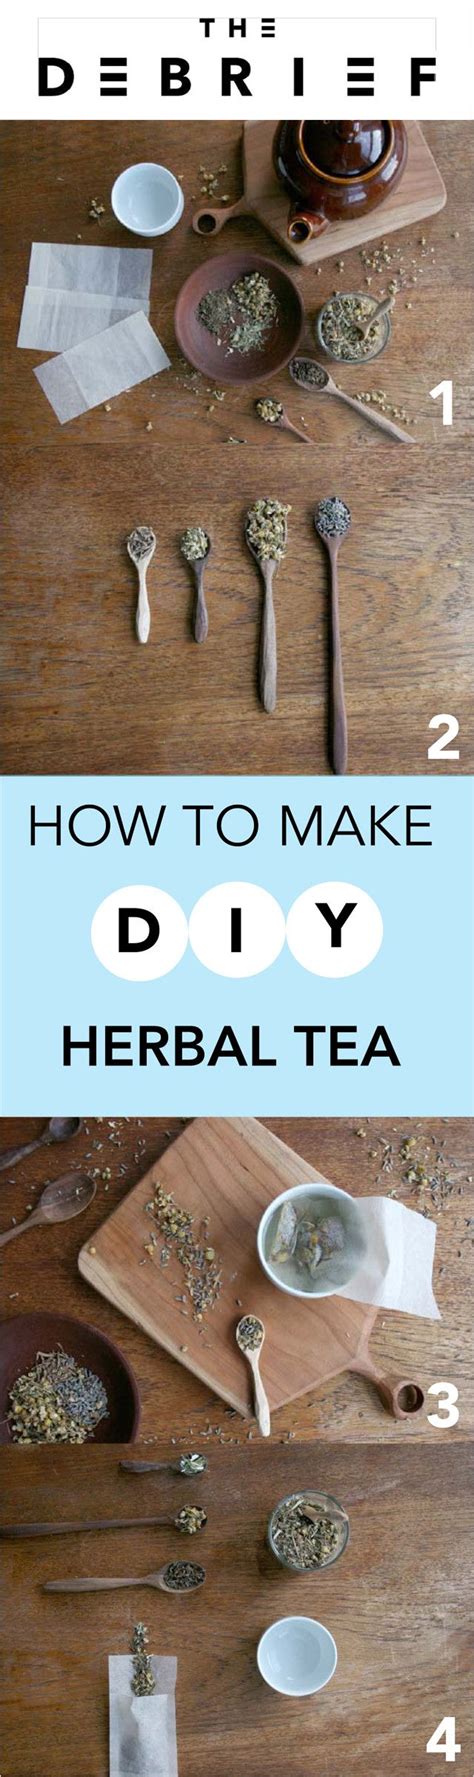 How To Make Your Own Herbal Teas Herbalism Herbal Tea Homemade